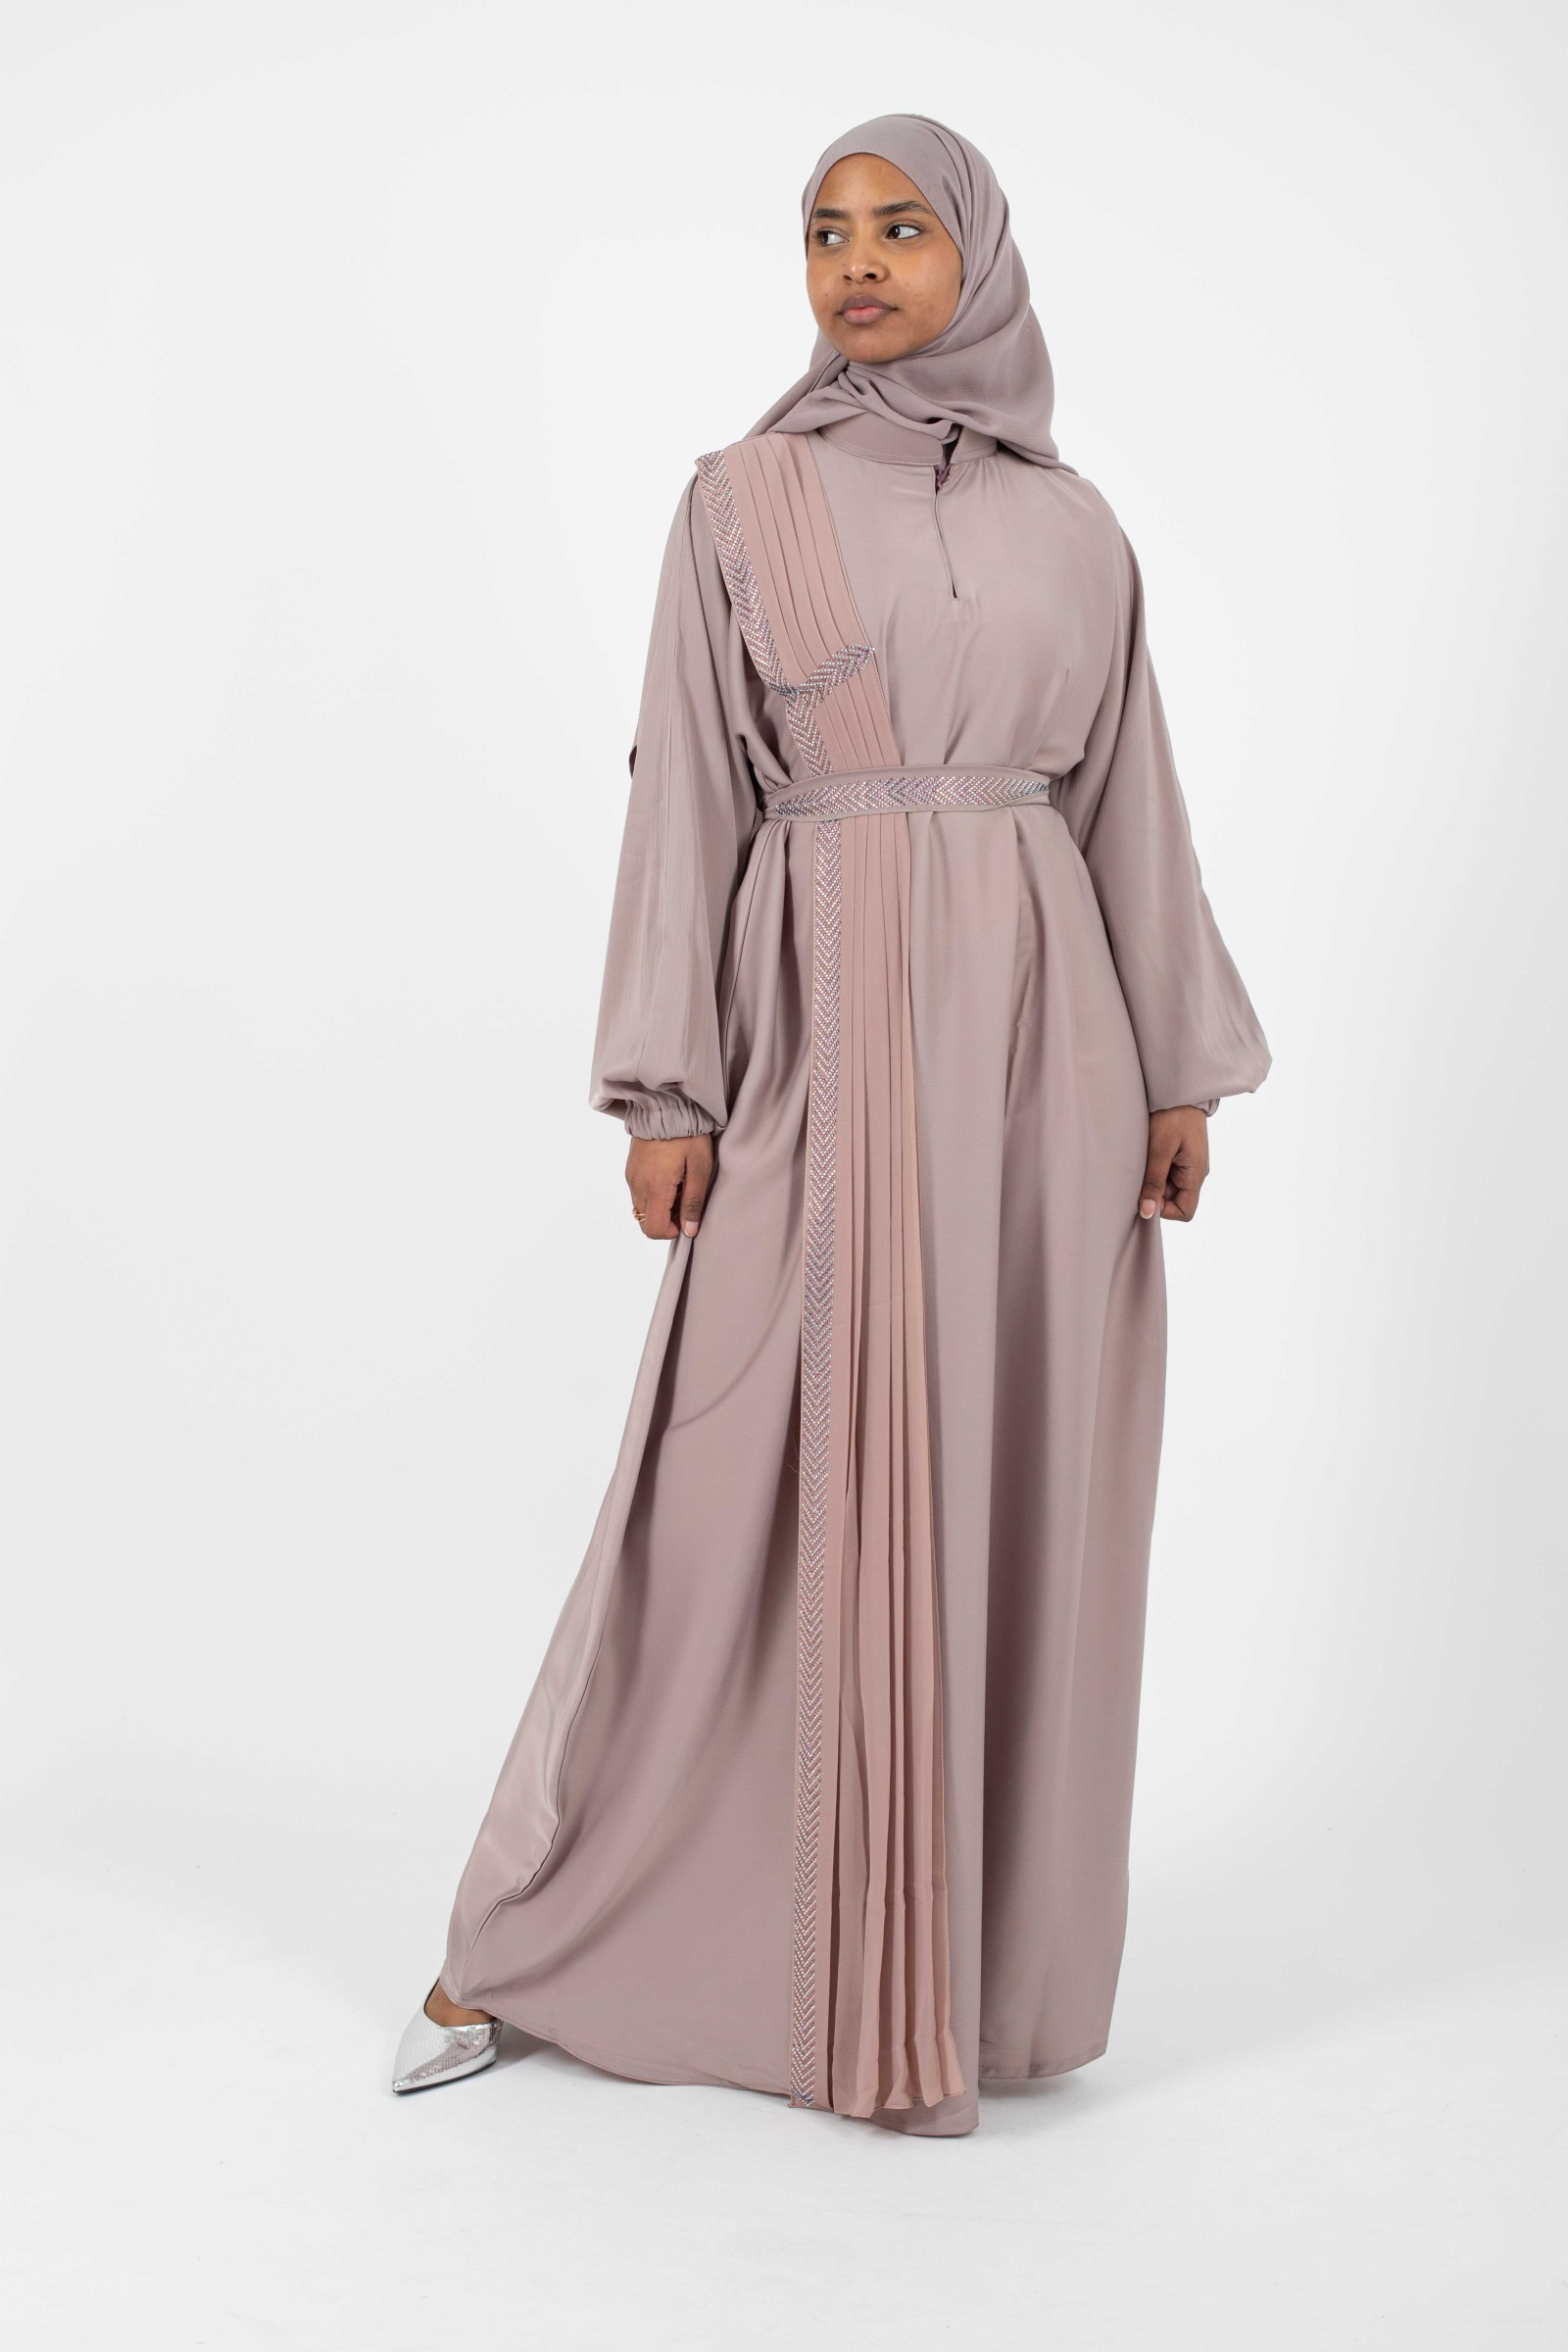 Abaya dubai chic and modern Muslim woman